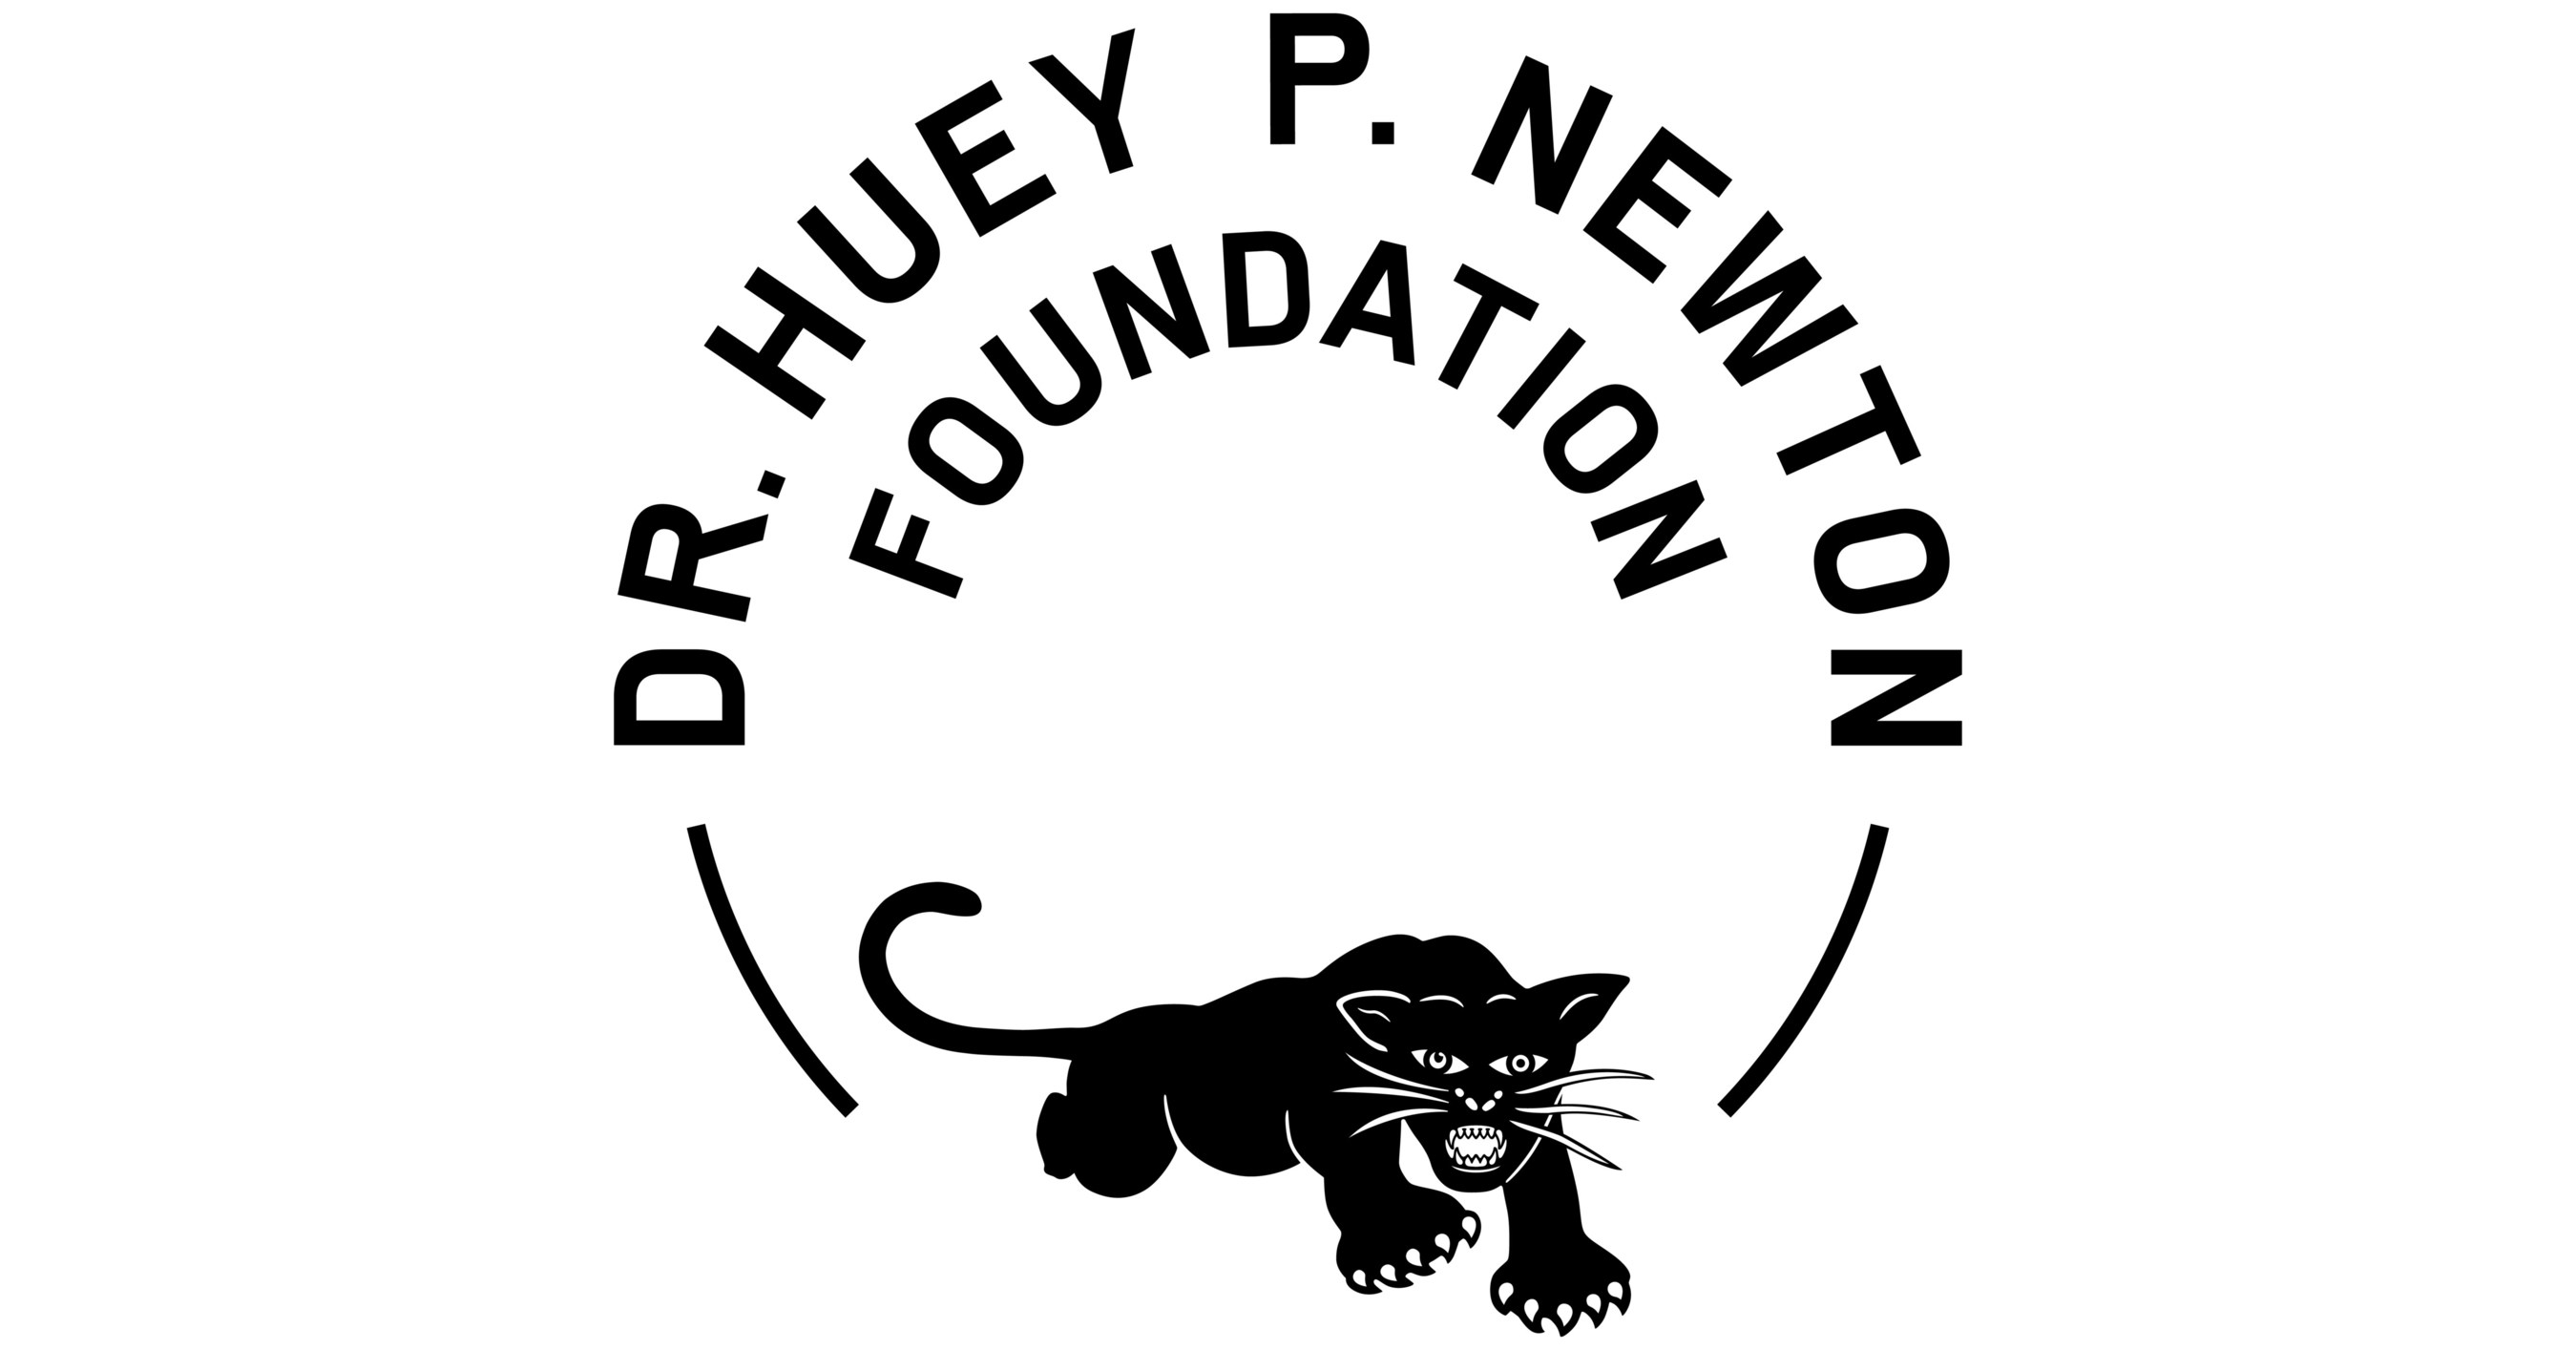 Dr. Huey P. Newton Foundation (@hueypnewtonfoundation) • Instagram